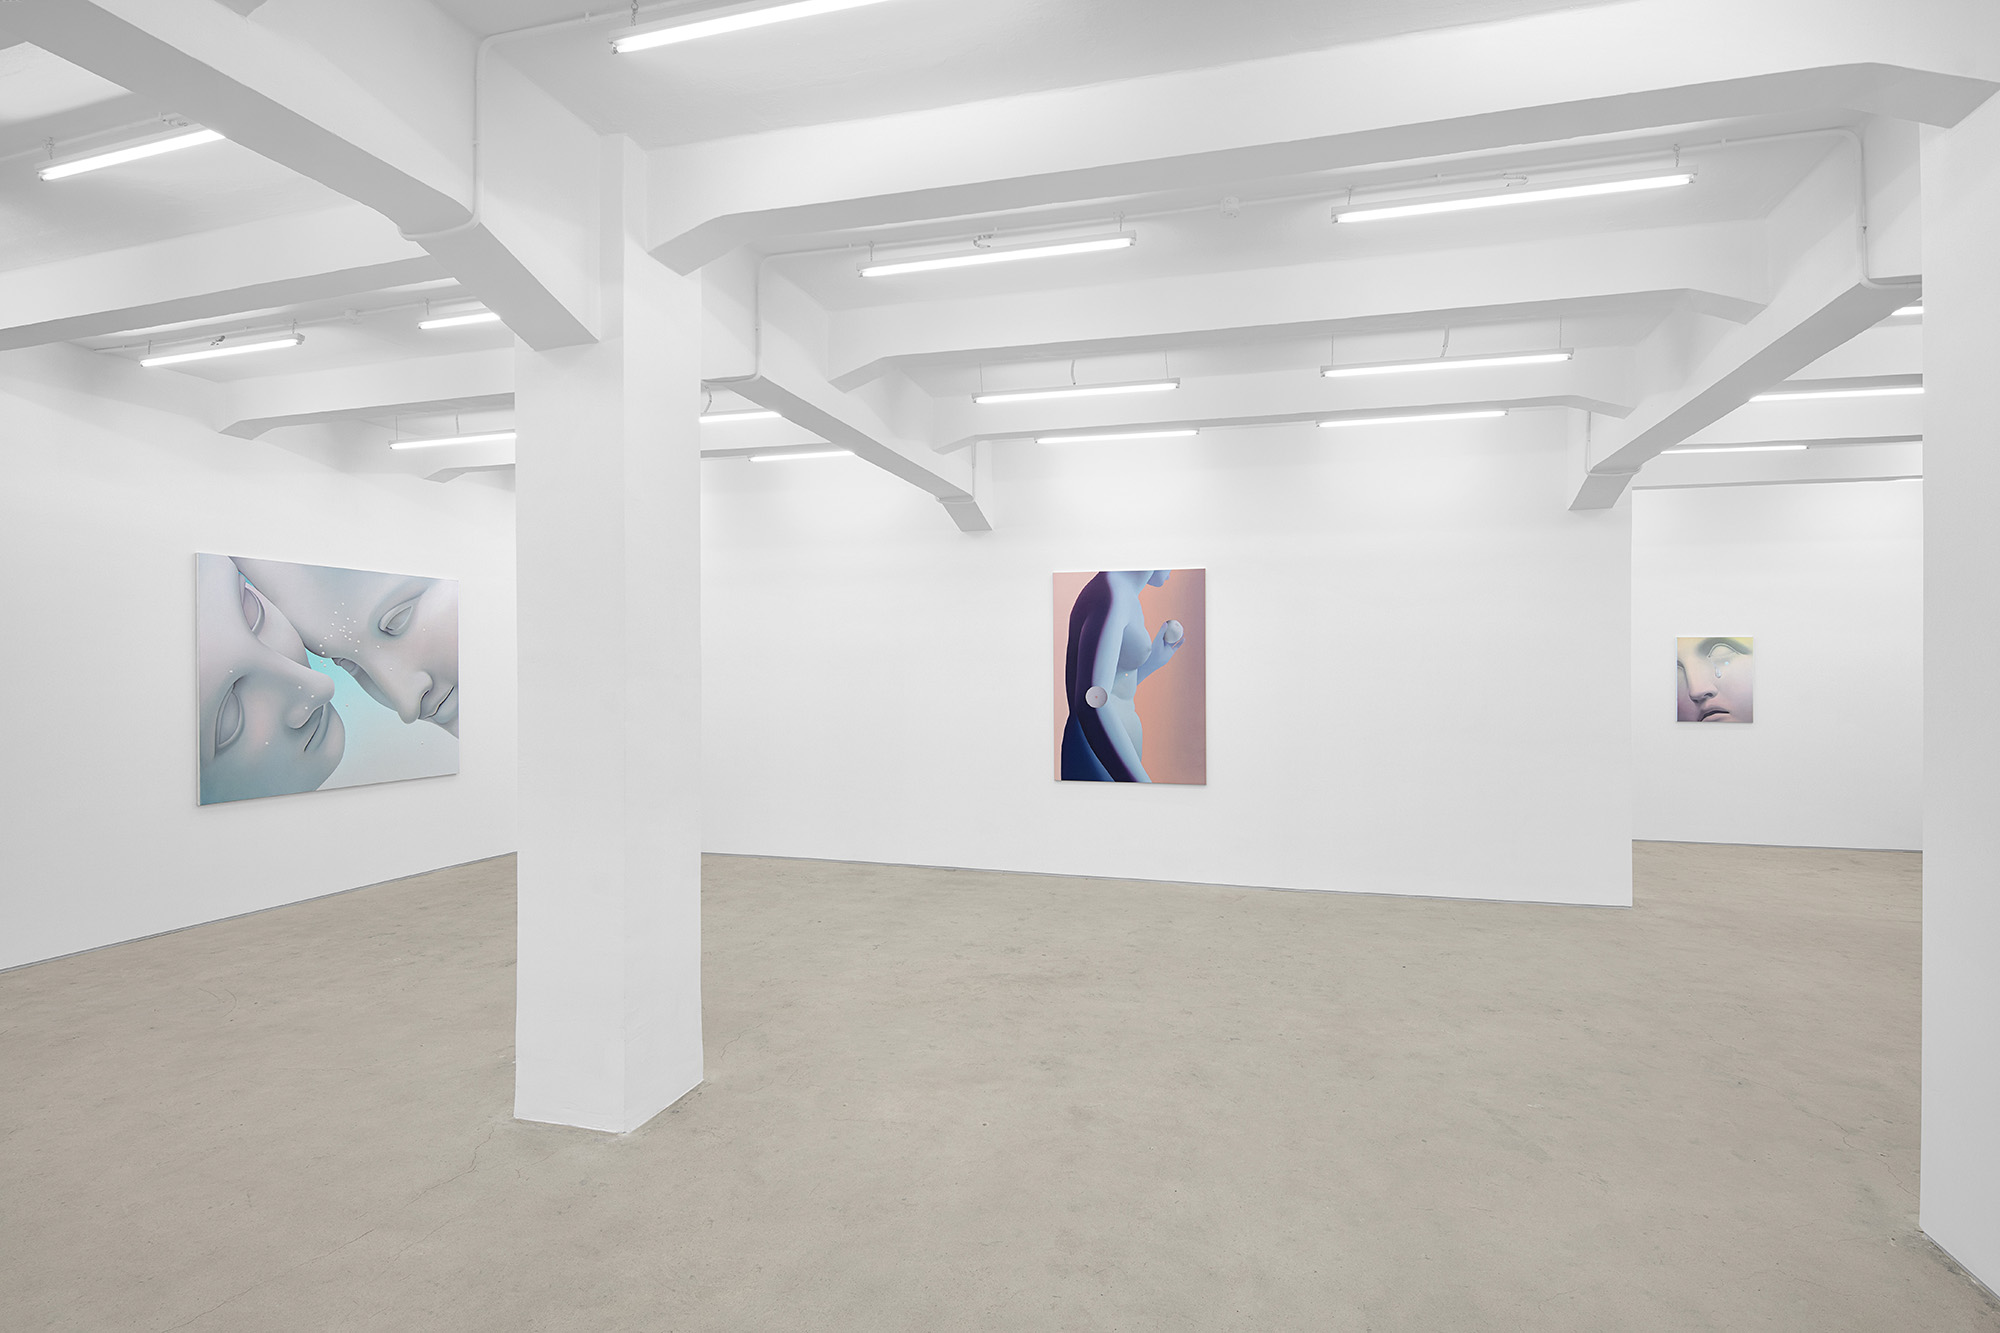 Vivian Greven, The Negatives, solo exhibition at Gallery Vacancy, installation view 11